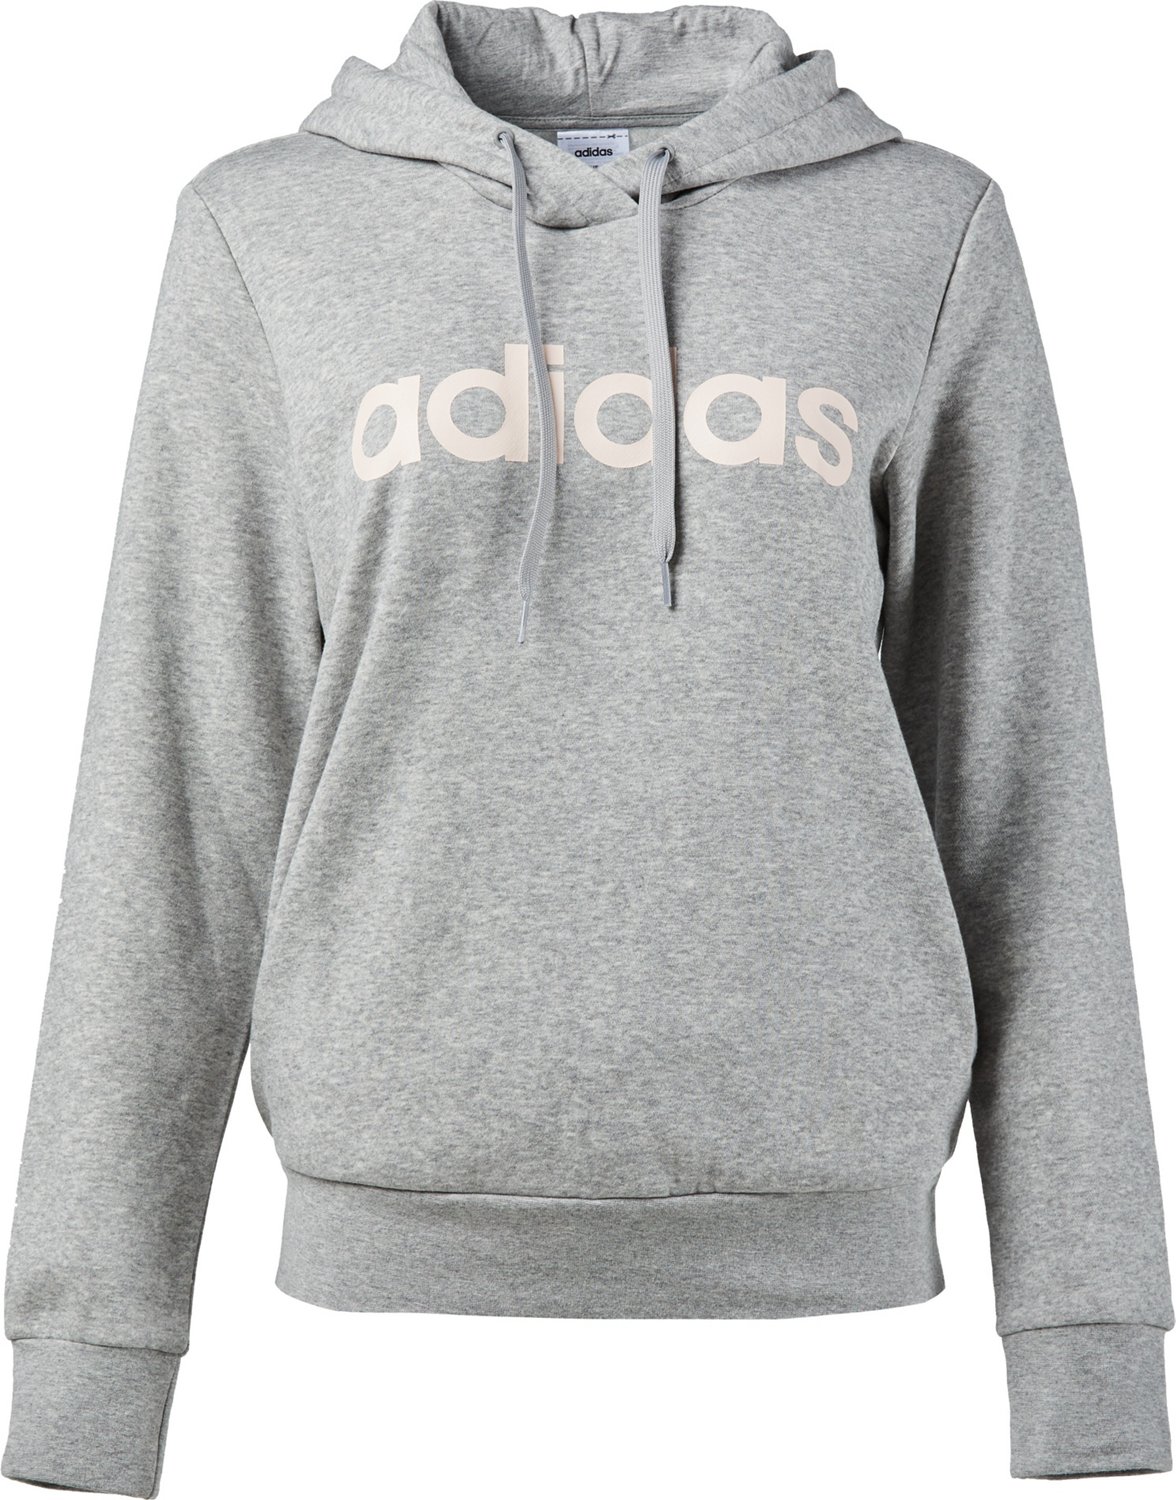 academy adidas hoodie